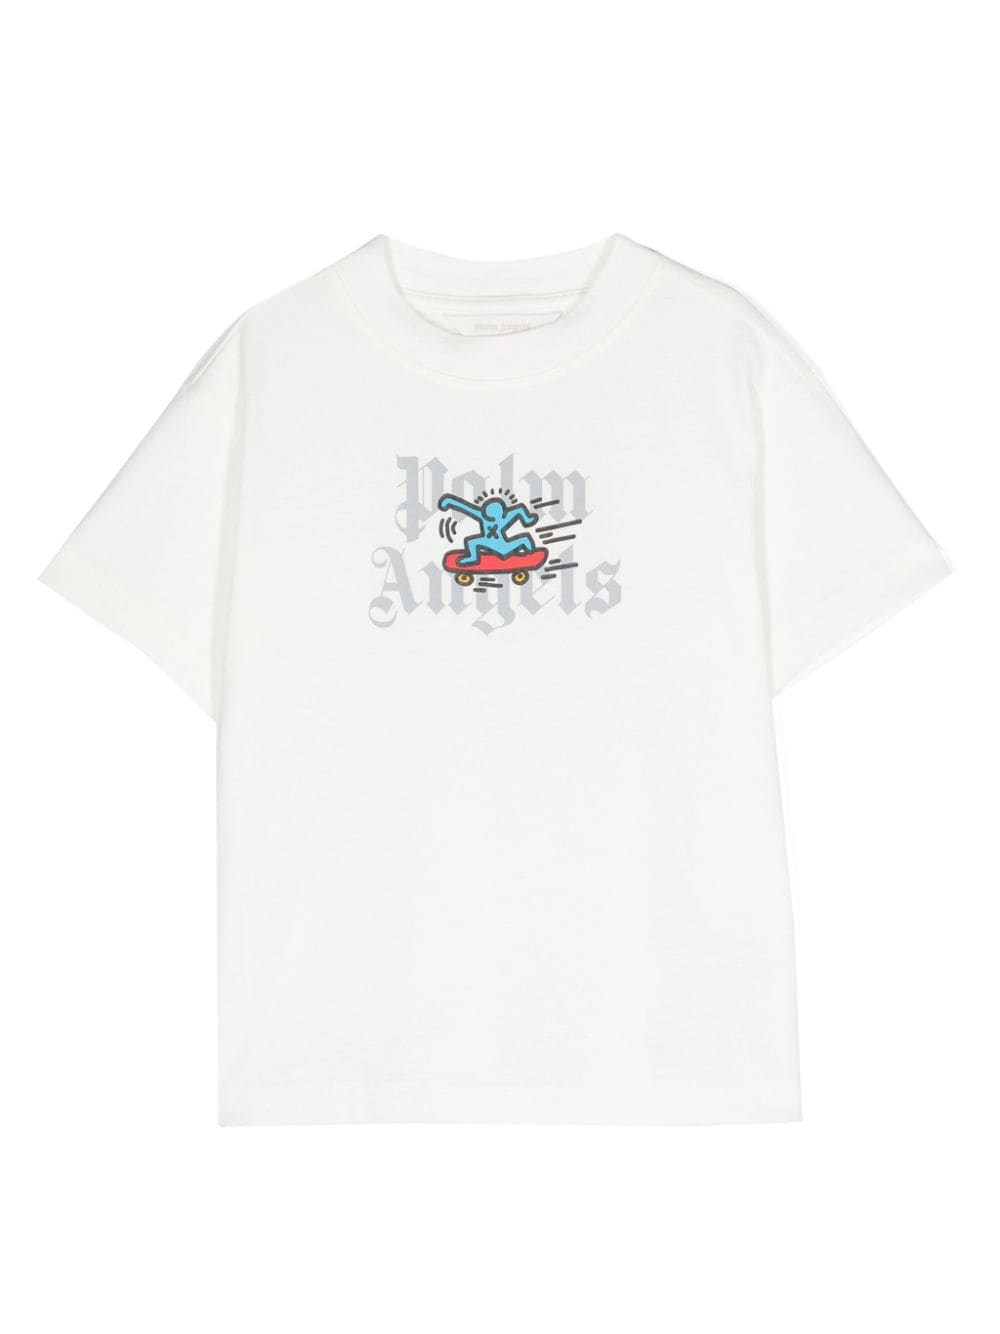 T-shirt Palm Angels Kids x Keith Haring - Rubino Kids